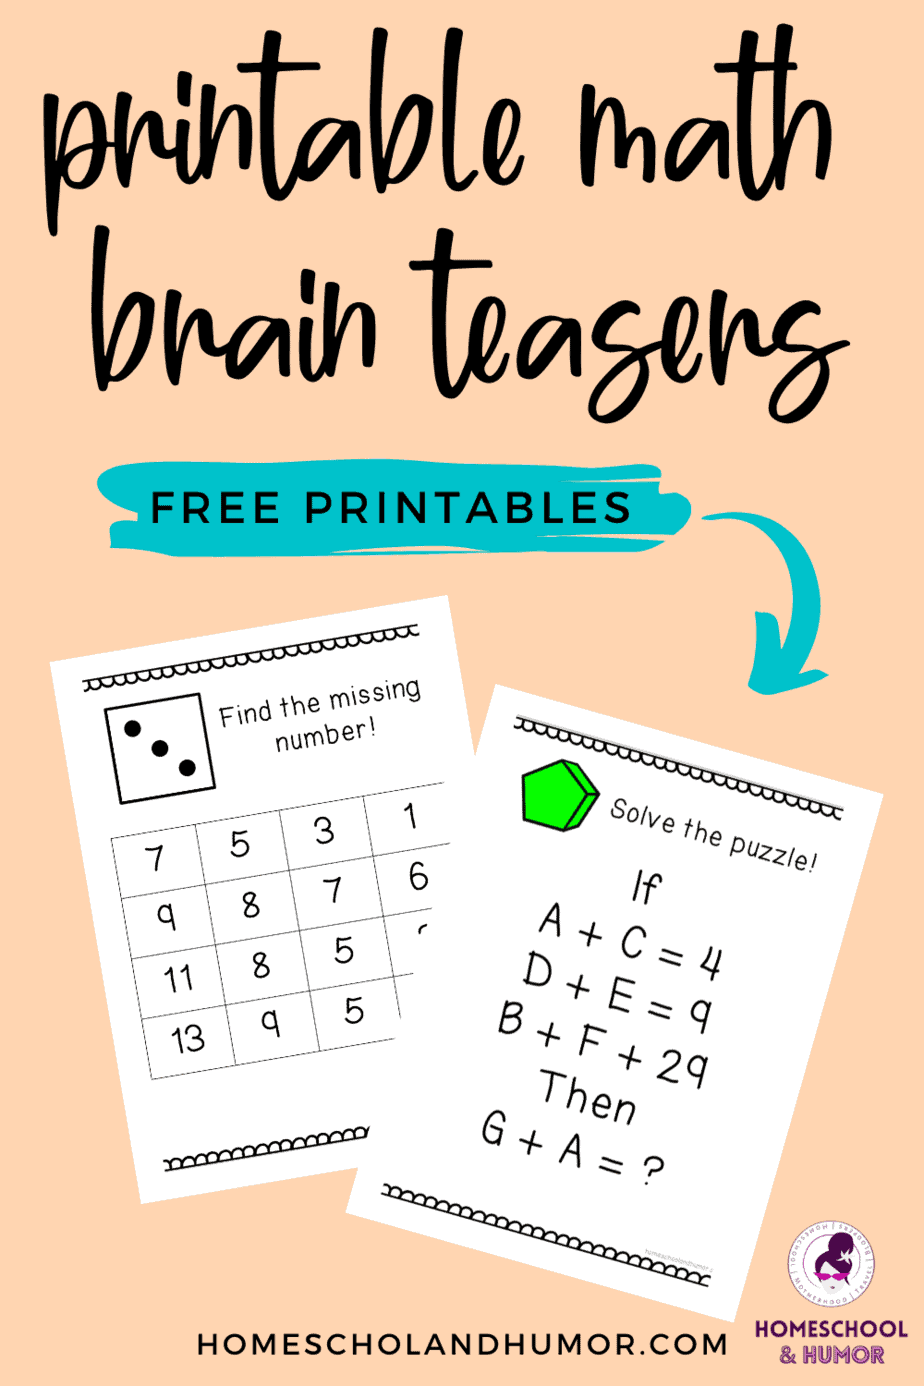 29 Fun Printable Math Brain Teasers To Practice Elementary Math Skills